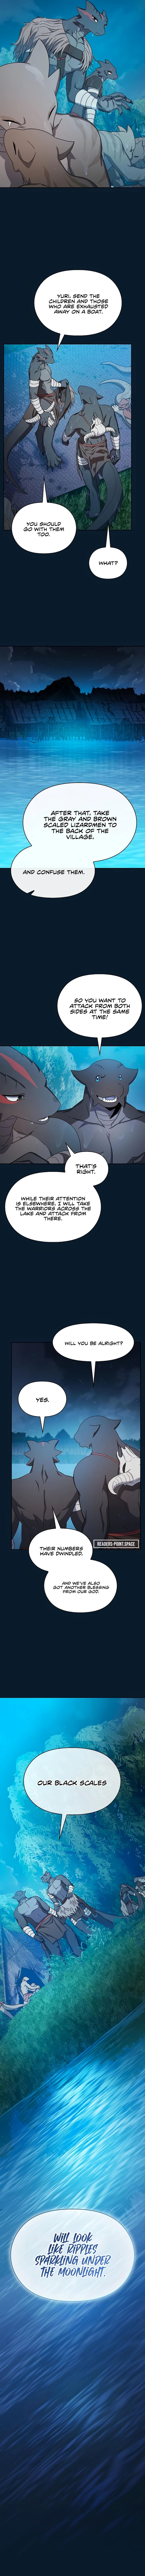 The Nebula’s Civilization - Chapter 22 Page 3